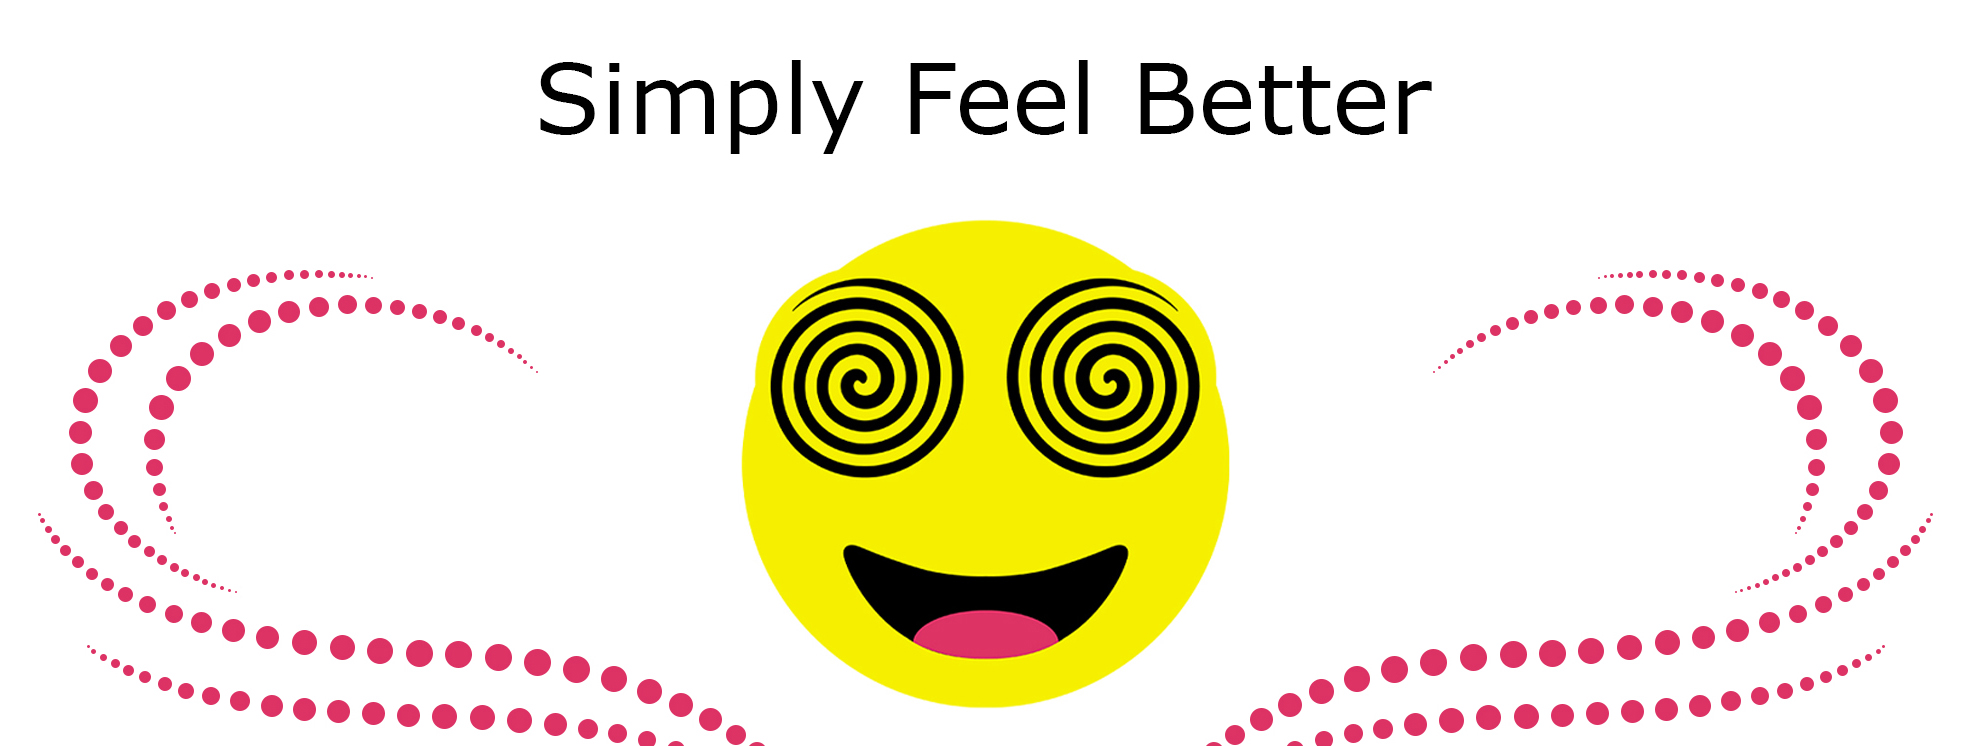 simply feel better